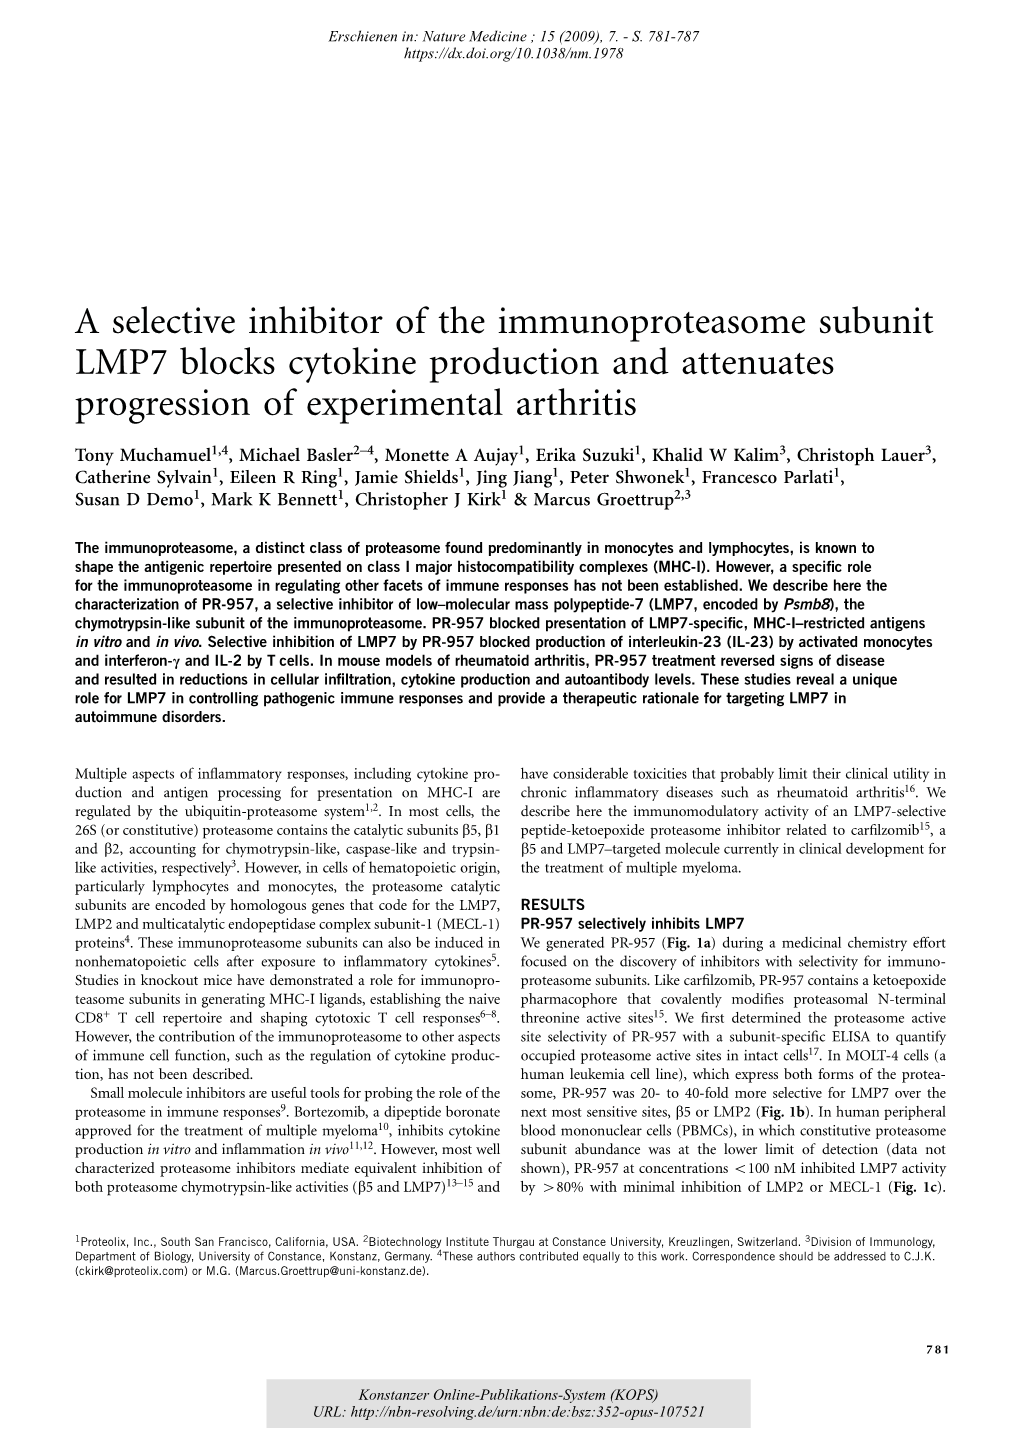 A Selective Inhibitor of the Immunoproteasome Subunit LMP7 Blocks Cytokine Production and Attenuates Progression of Experimental Arthritis